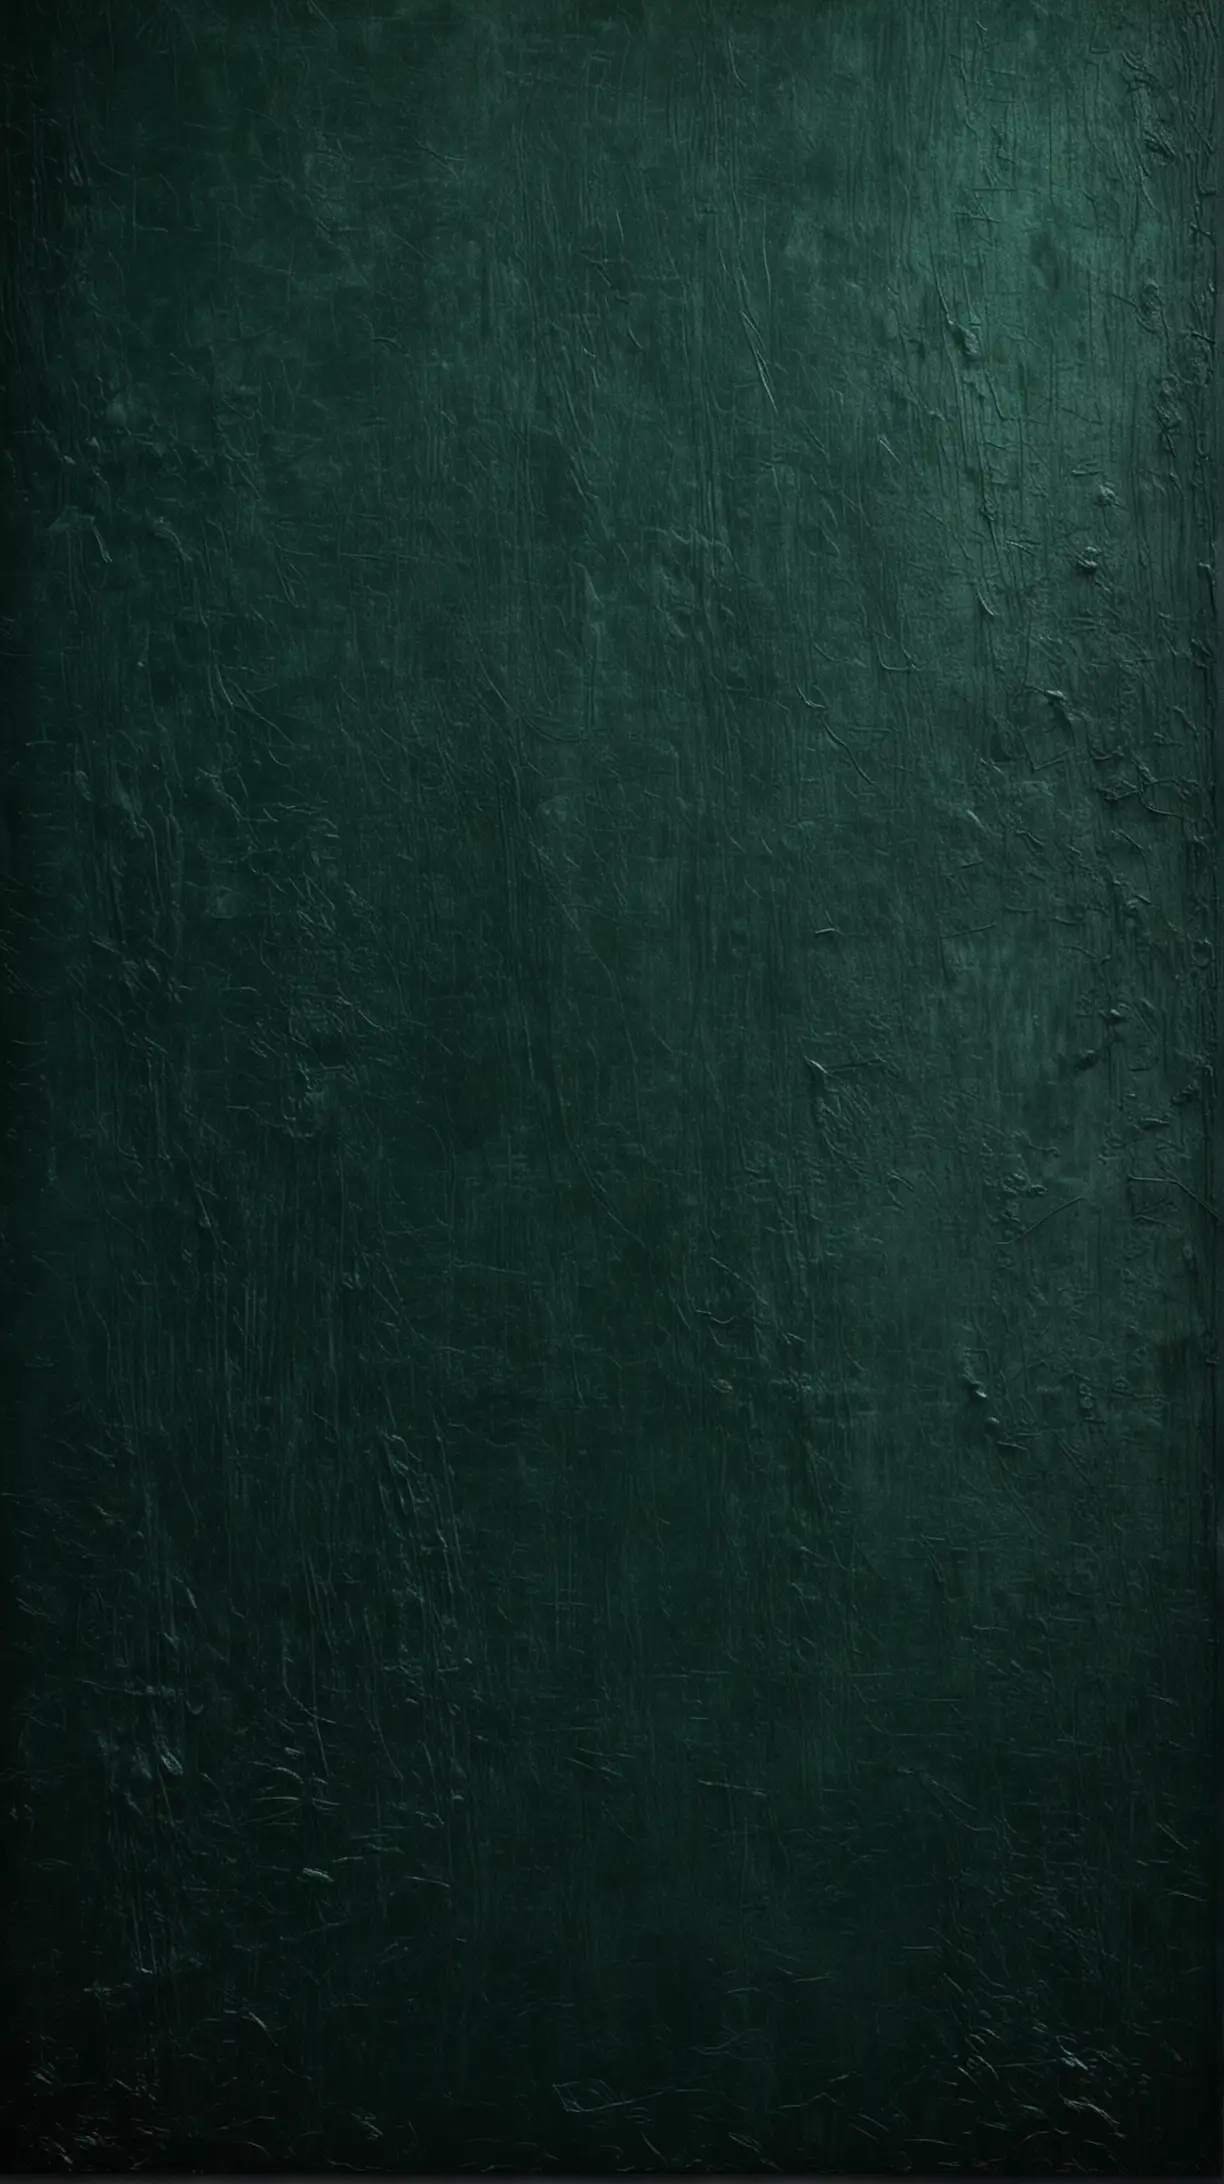 artistic fine art style textures with  dark emerald monochrome background with slightly darker edges